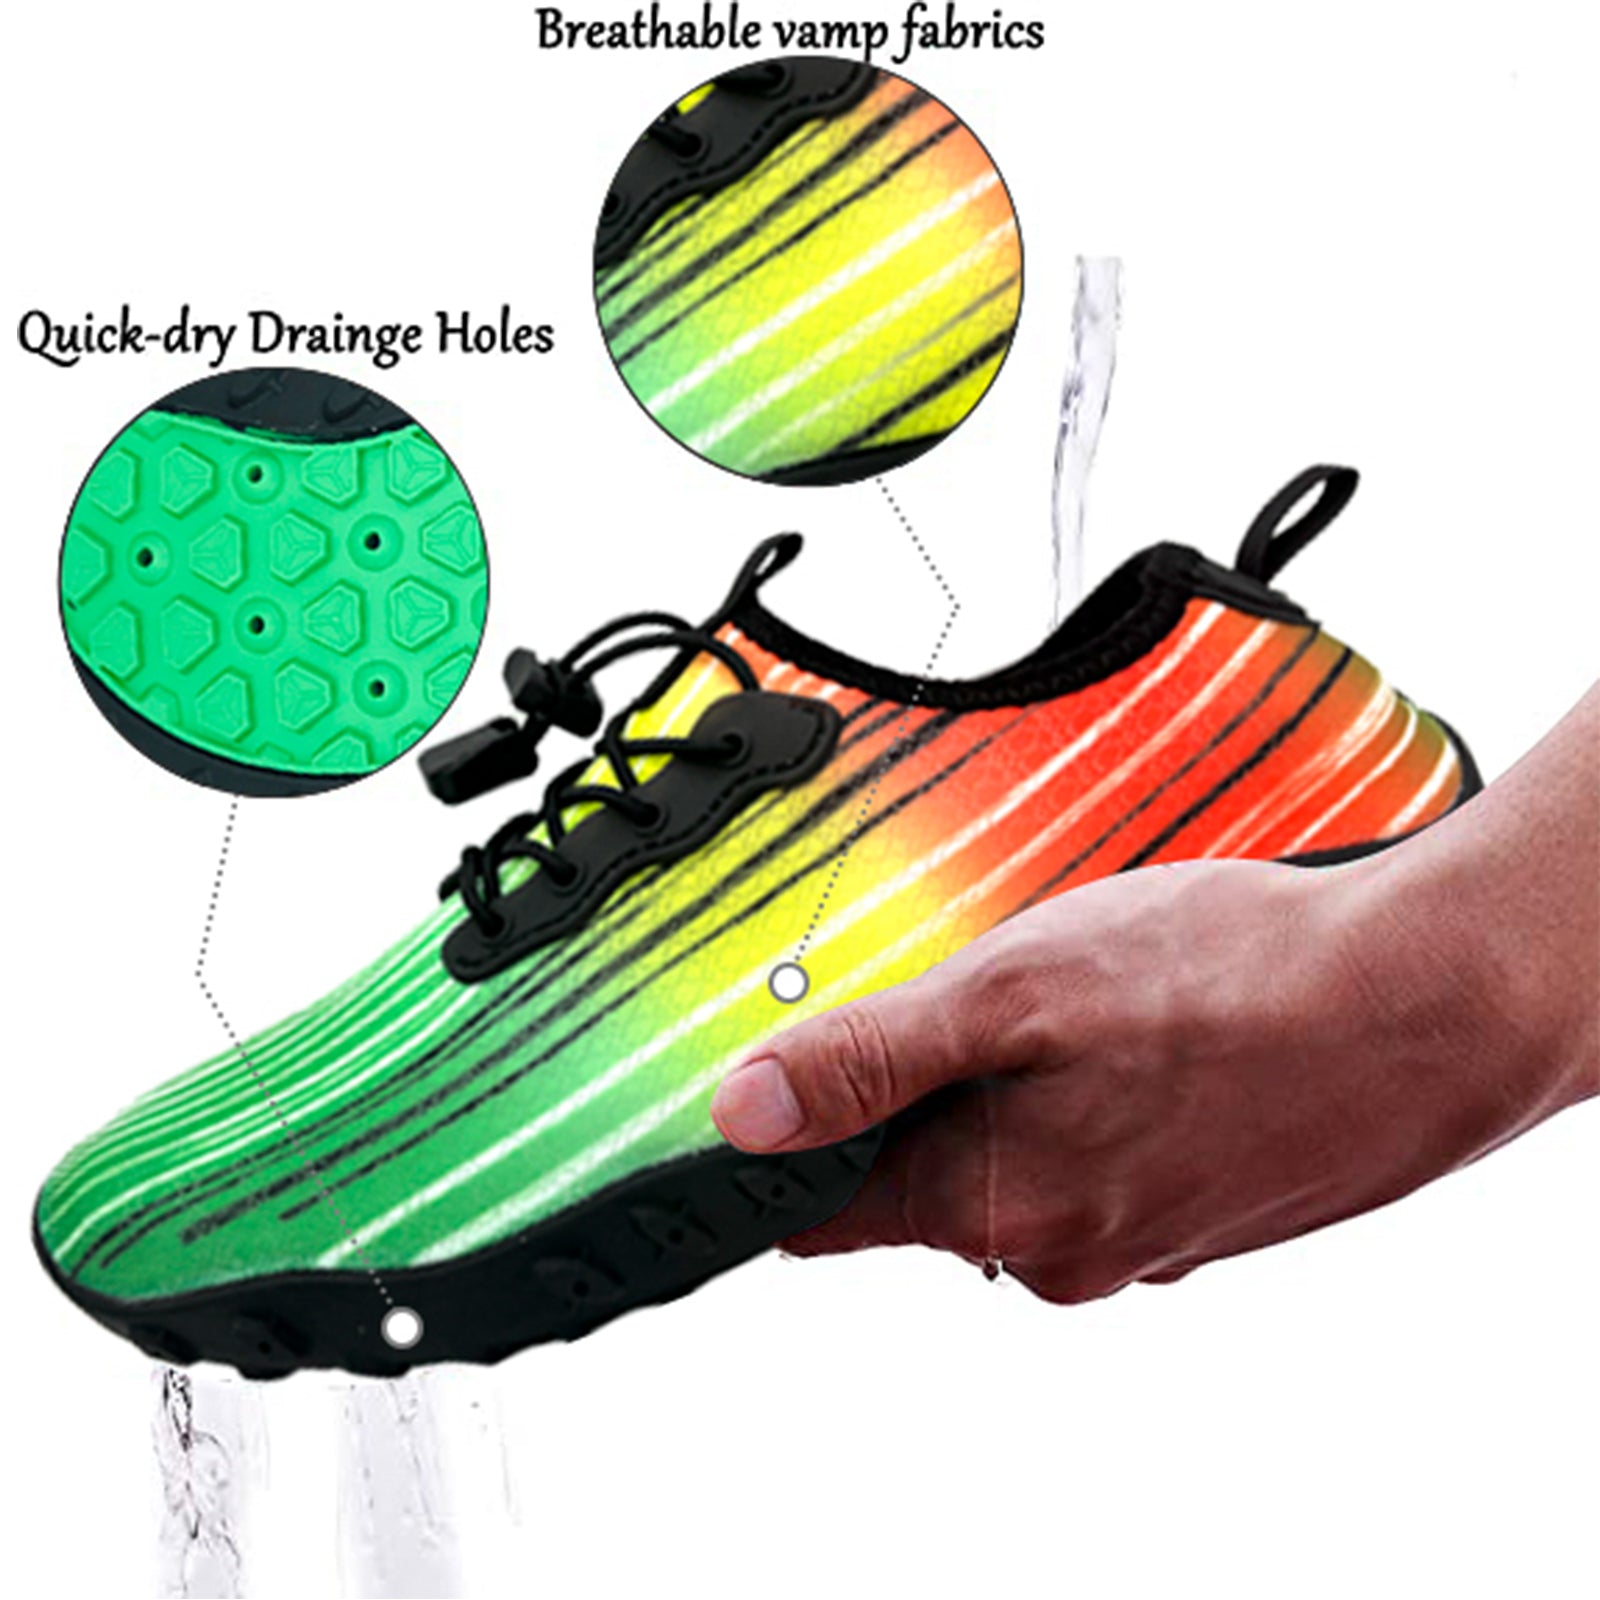 Water Shoes for Men and Women Soft Breathable Slip-on Aqua Shoes Aqua Socks for Swim Beach Pool Surf Yoga (Green Size US 9.5)